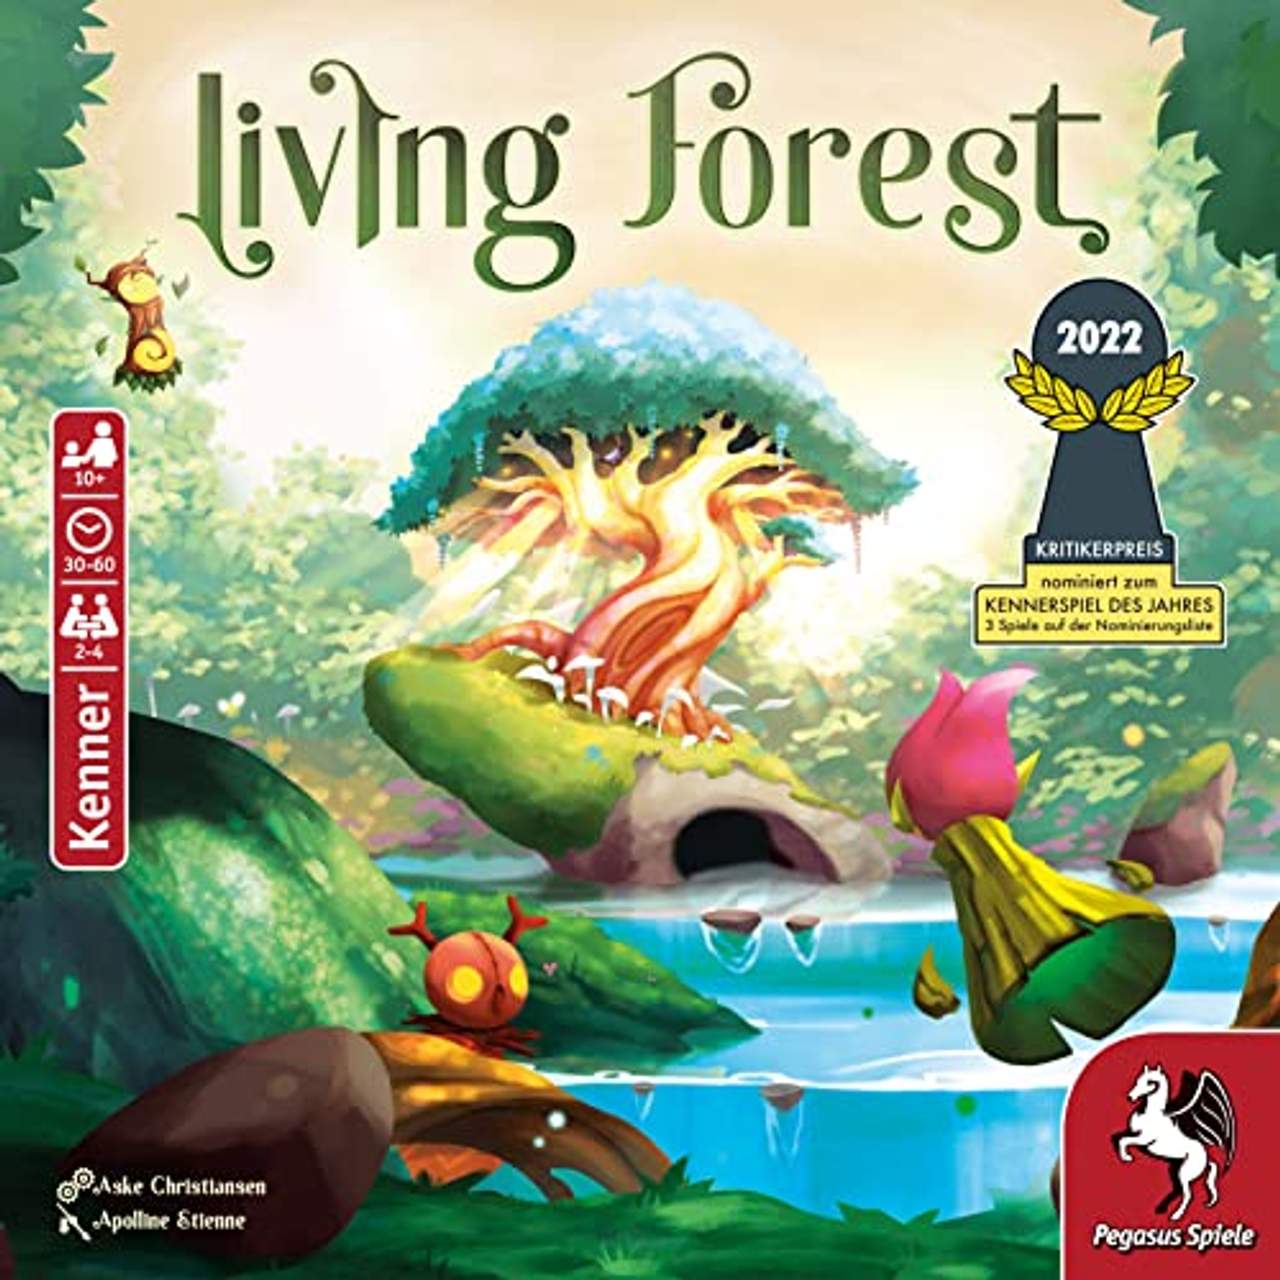 Pegasus Spiele 51234G Living Forest Kennerspiel des Jahres 2022